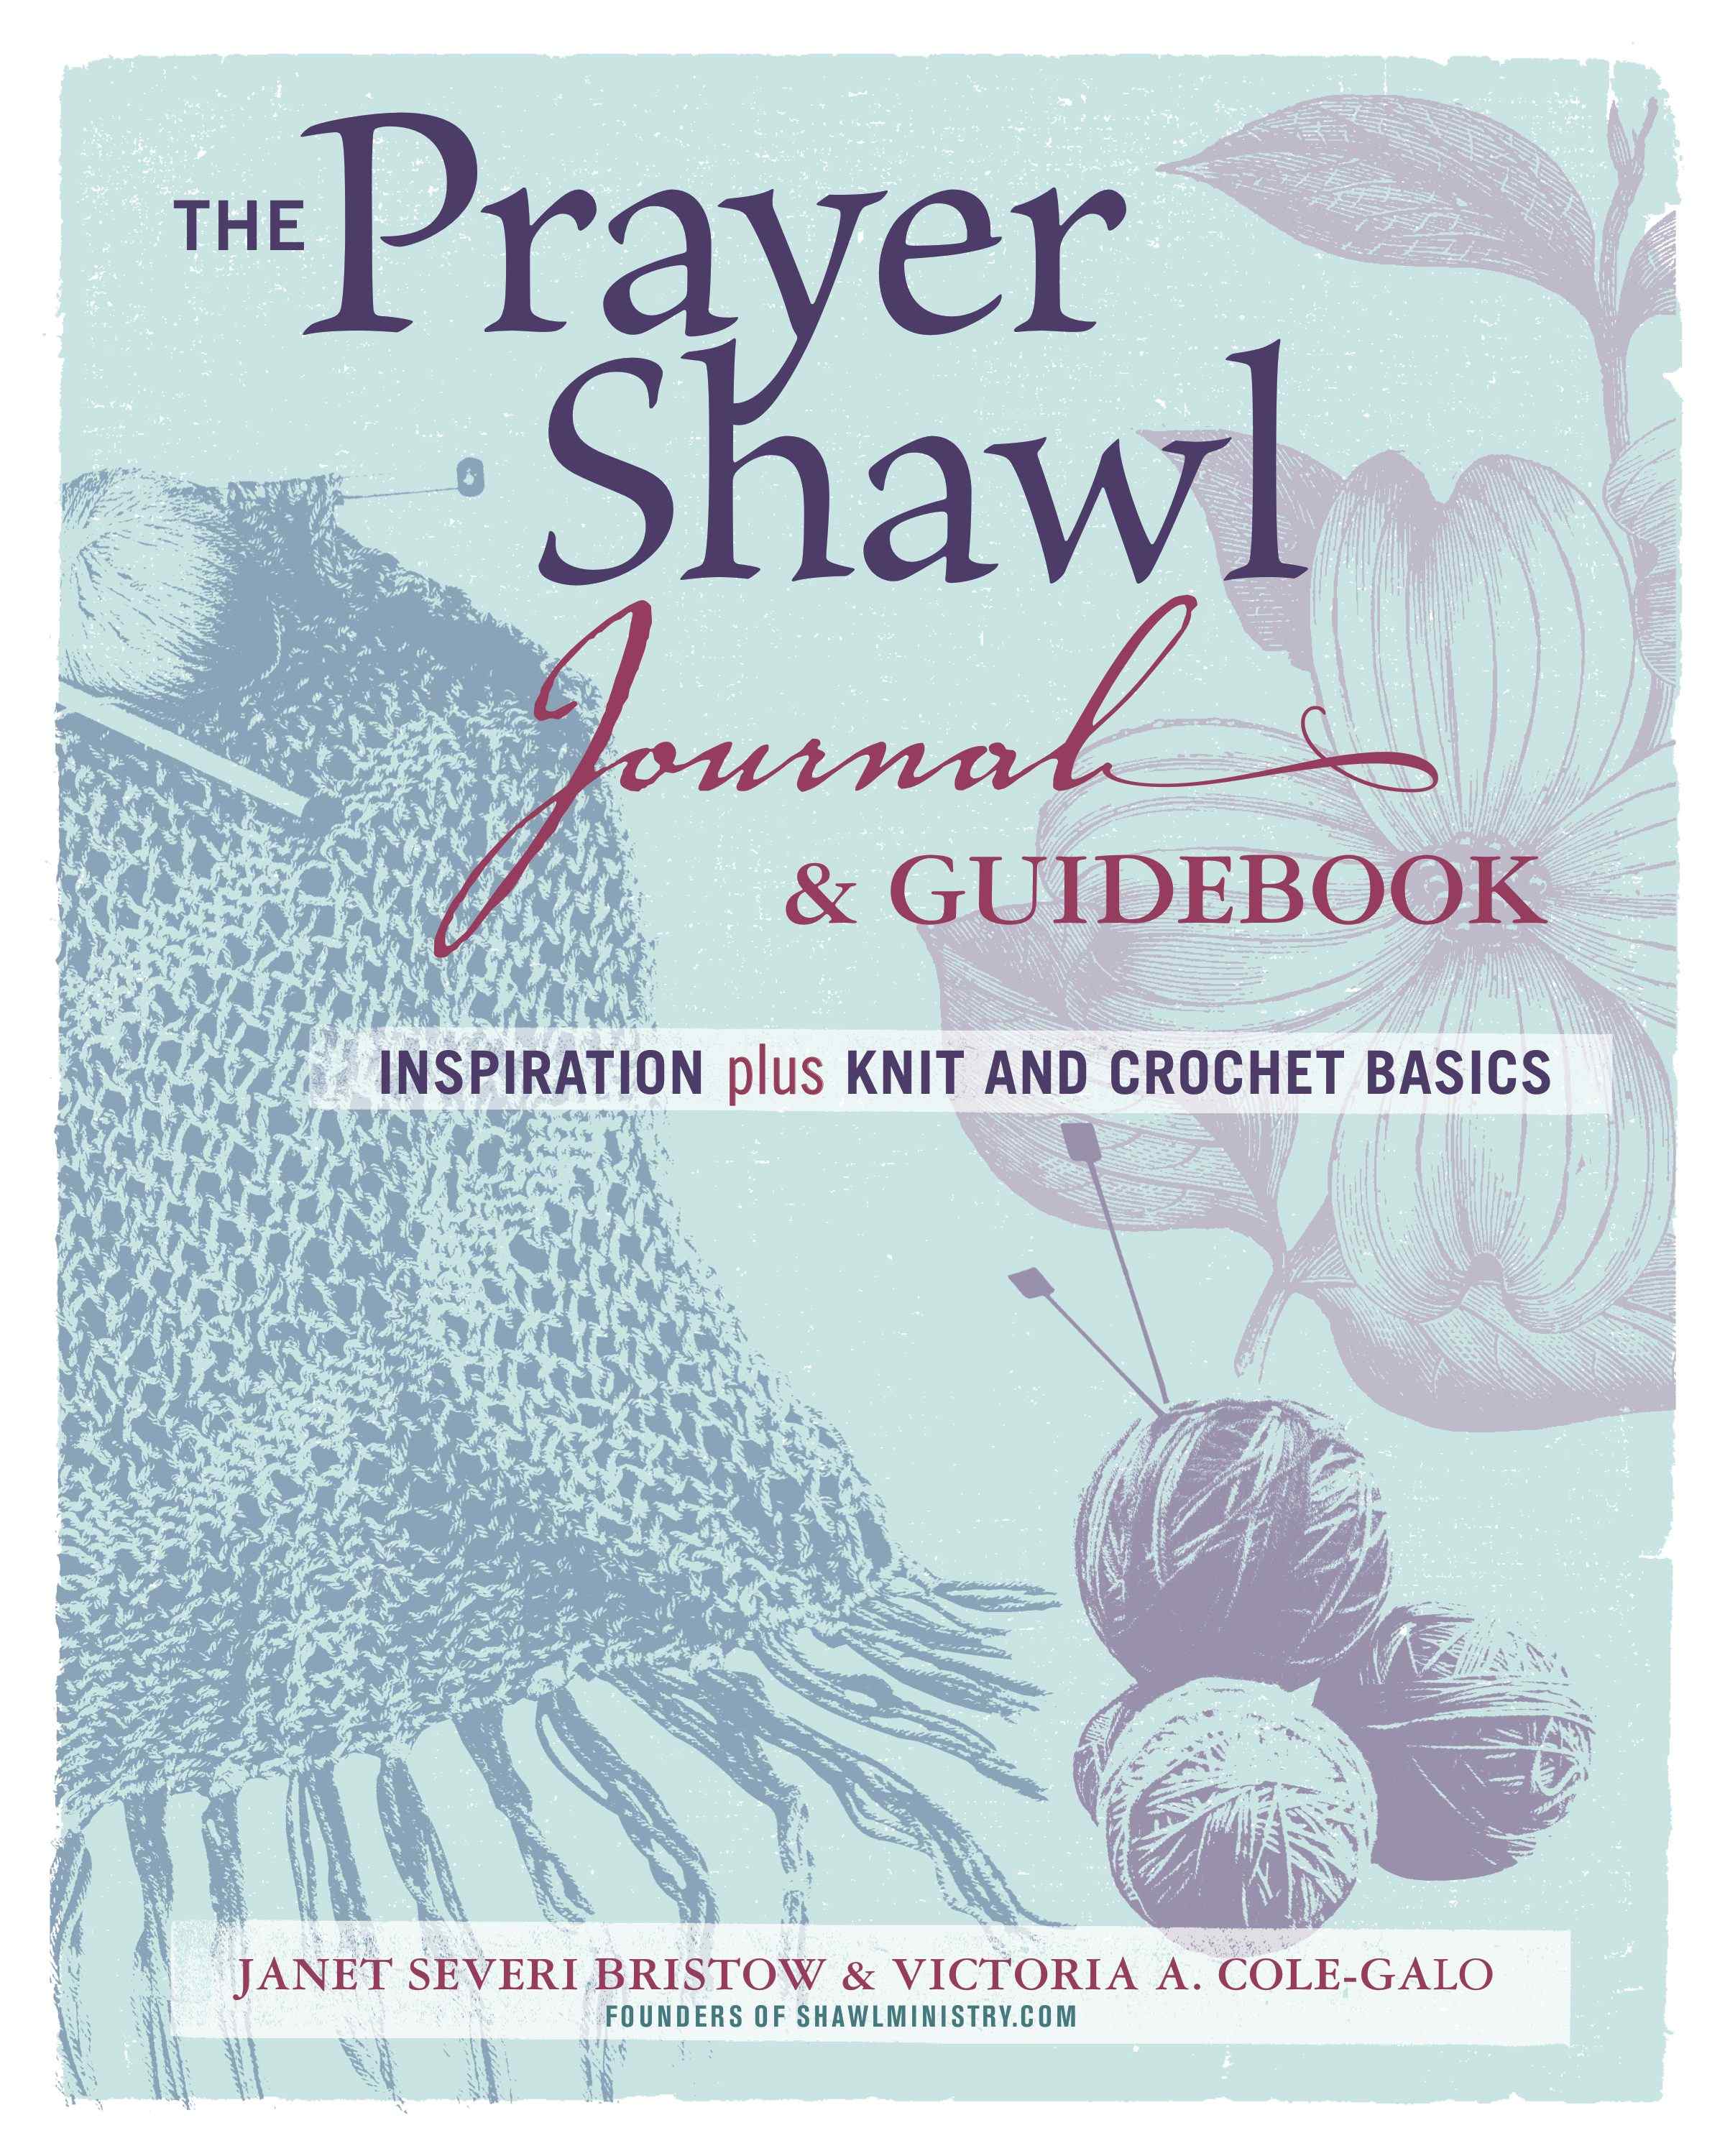 Welcome To The Prayer Shawl Ministry Www Shawlministry Com,Gyro Recipe Chicken